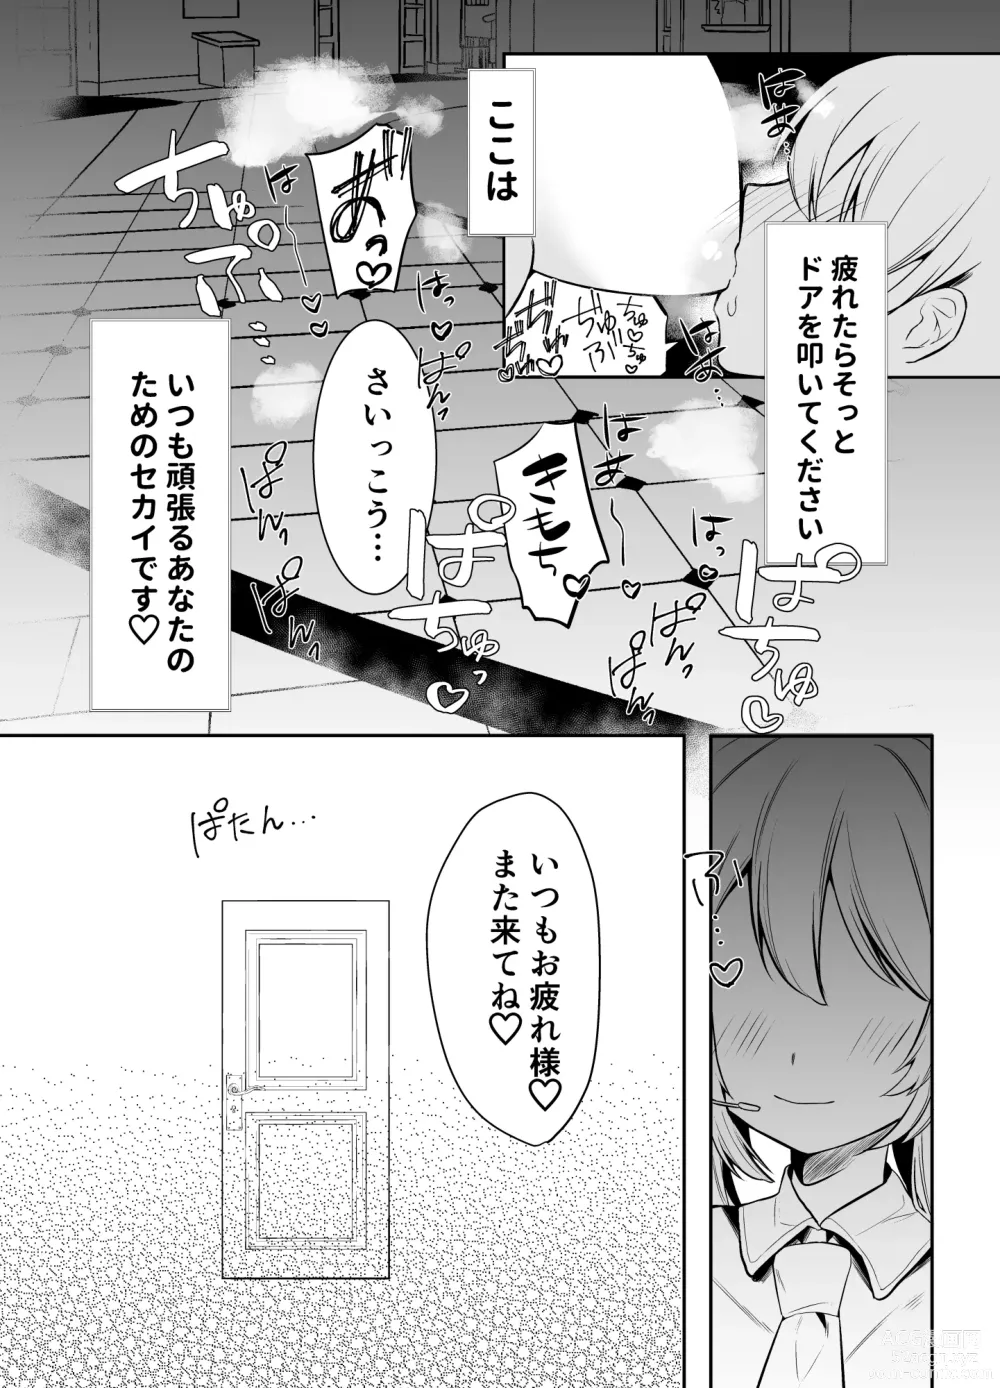 Page 20 of doujinshi Mafuyu no Himitsu